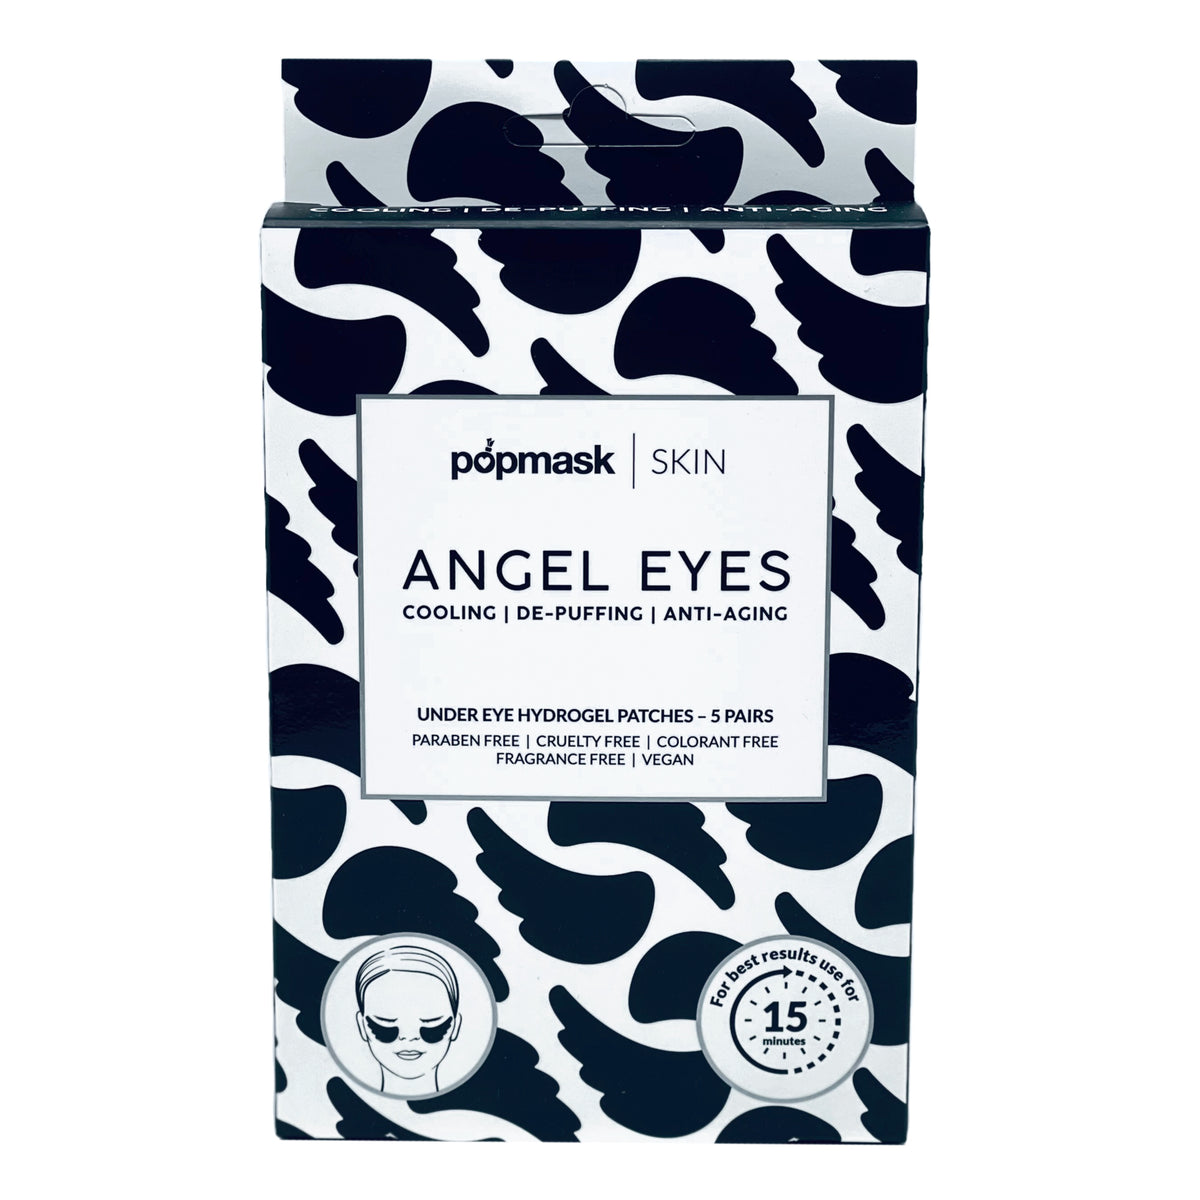 Googly Eye Mask: Gel eye pads that look like googly eyes!